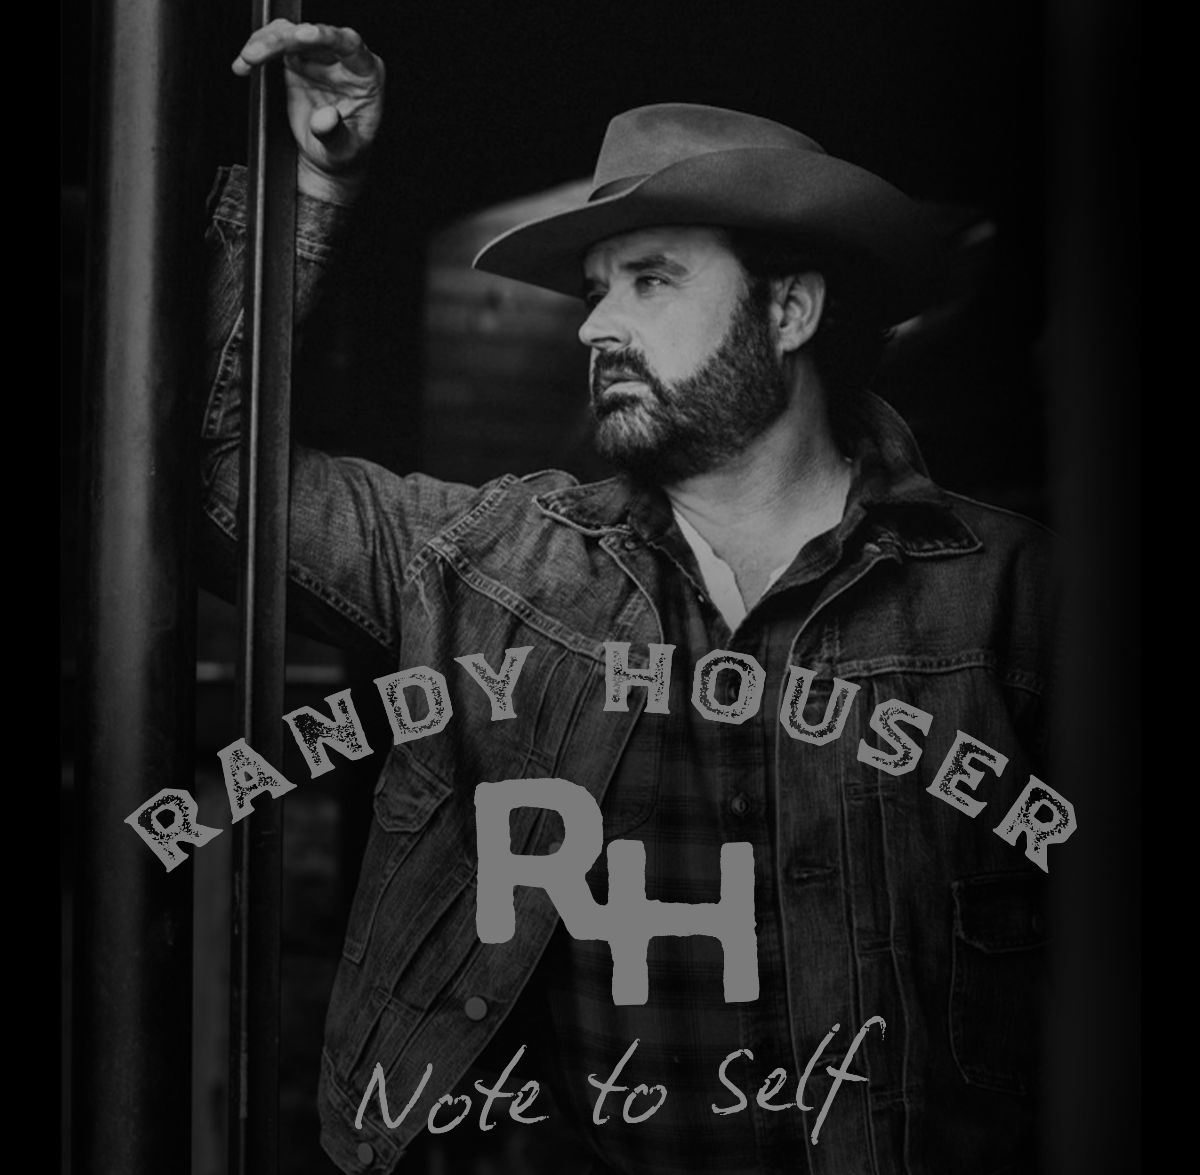 Randy Houser Announces Sixth Studio Album ‘Note To Self’ Set for 11/11